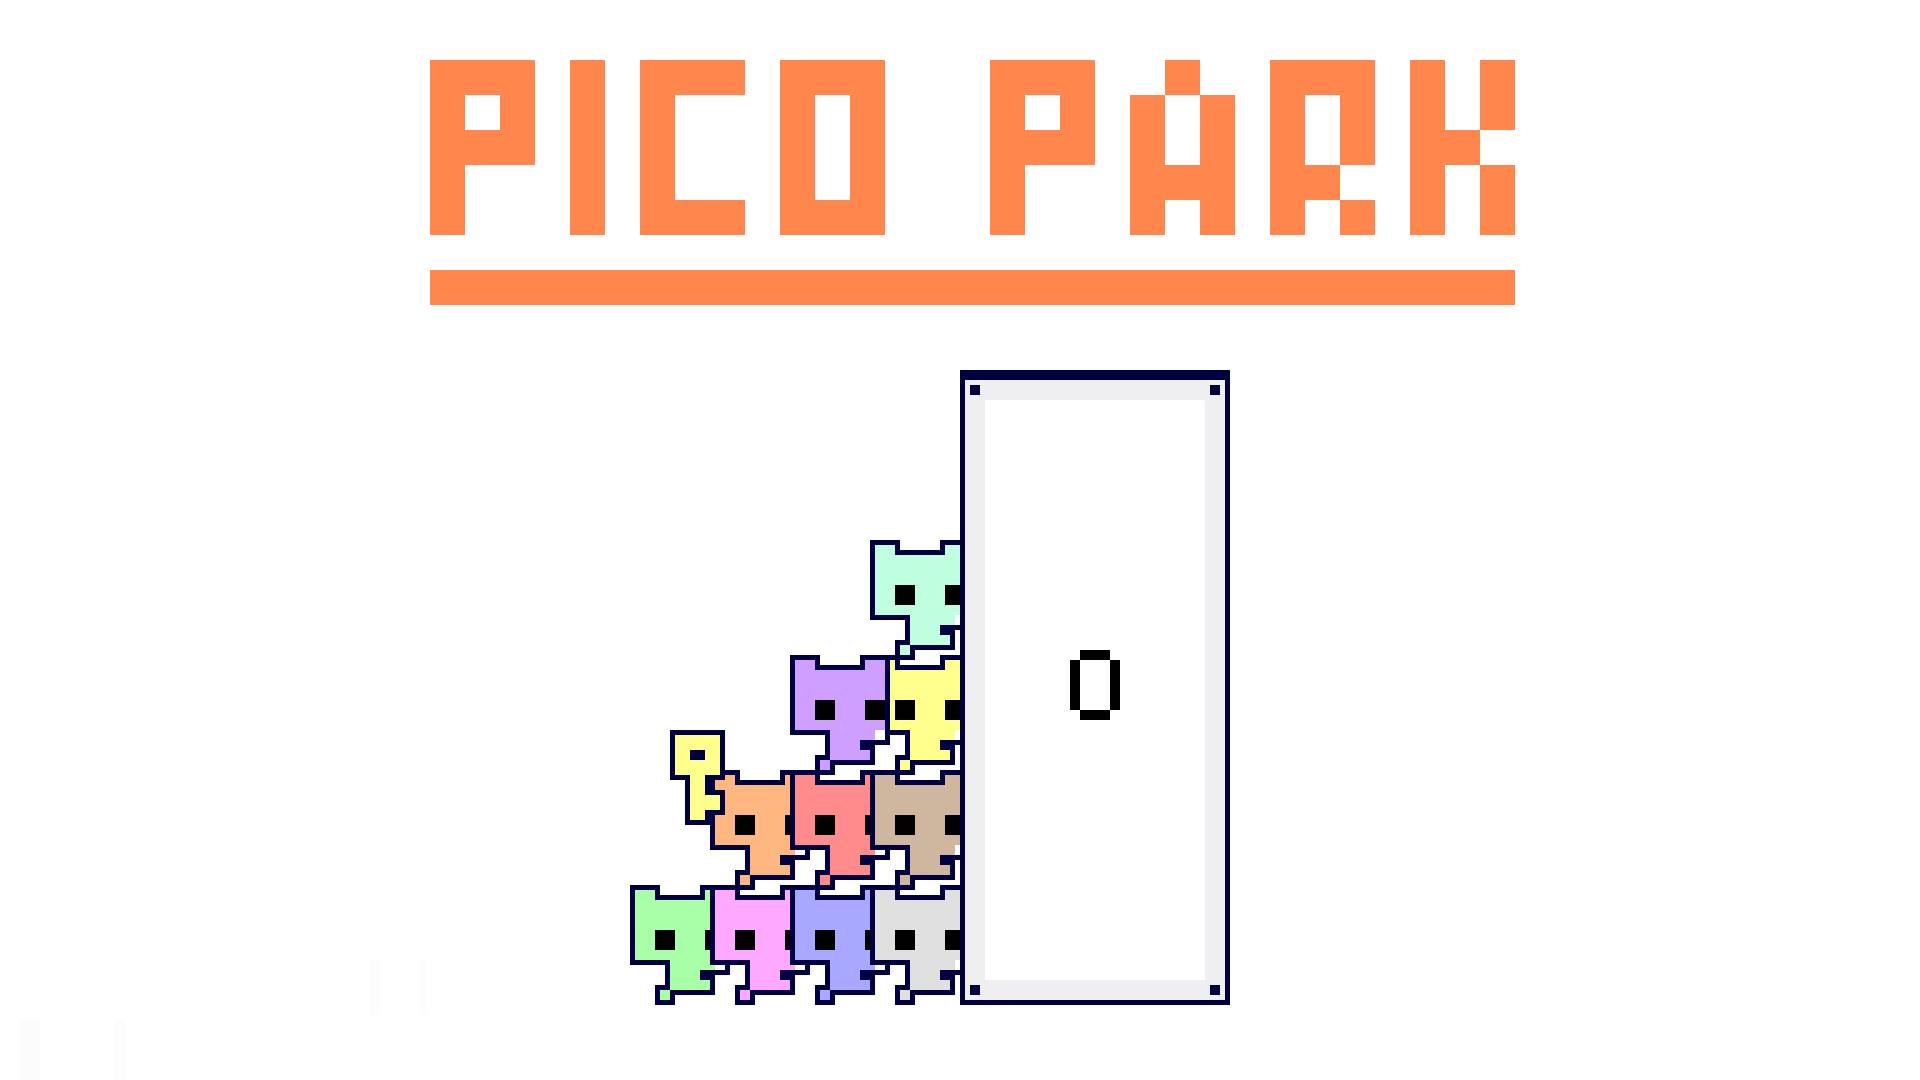 Pico park game